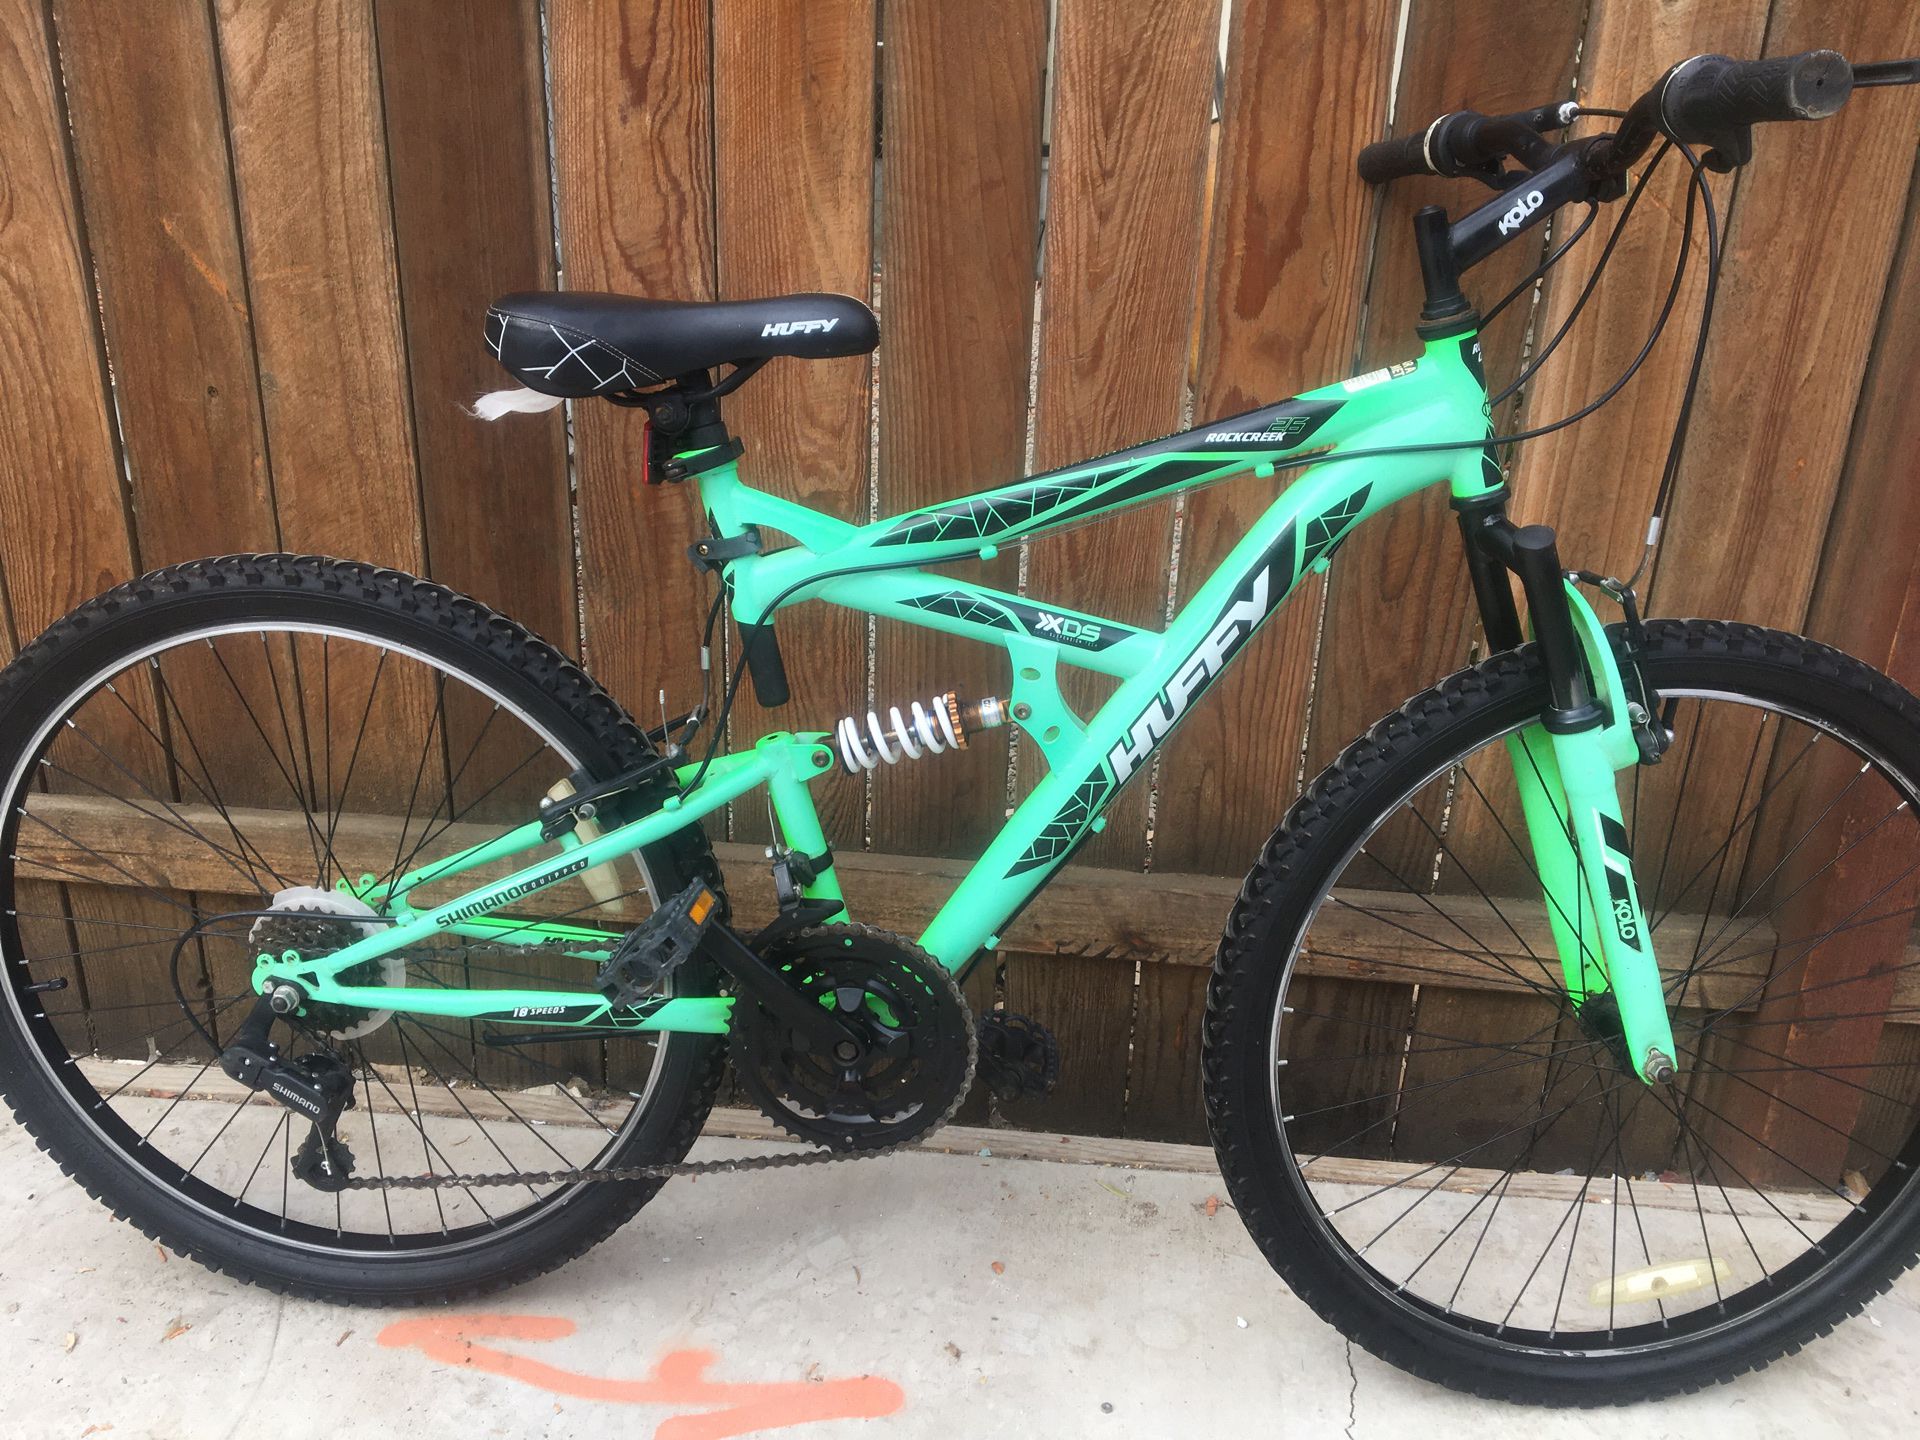 Green 26” Huffy mountain bike